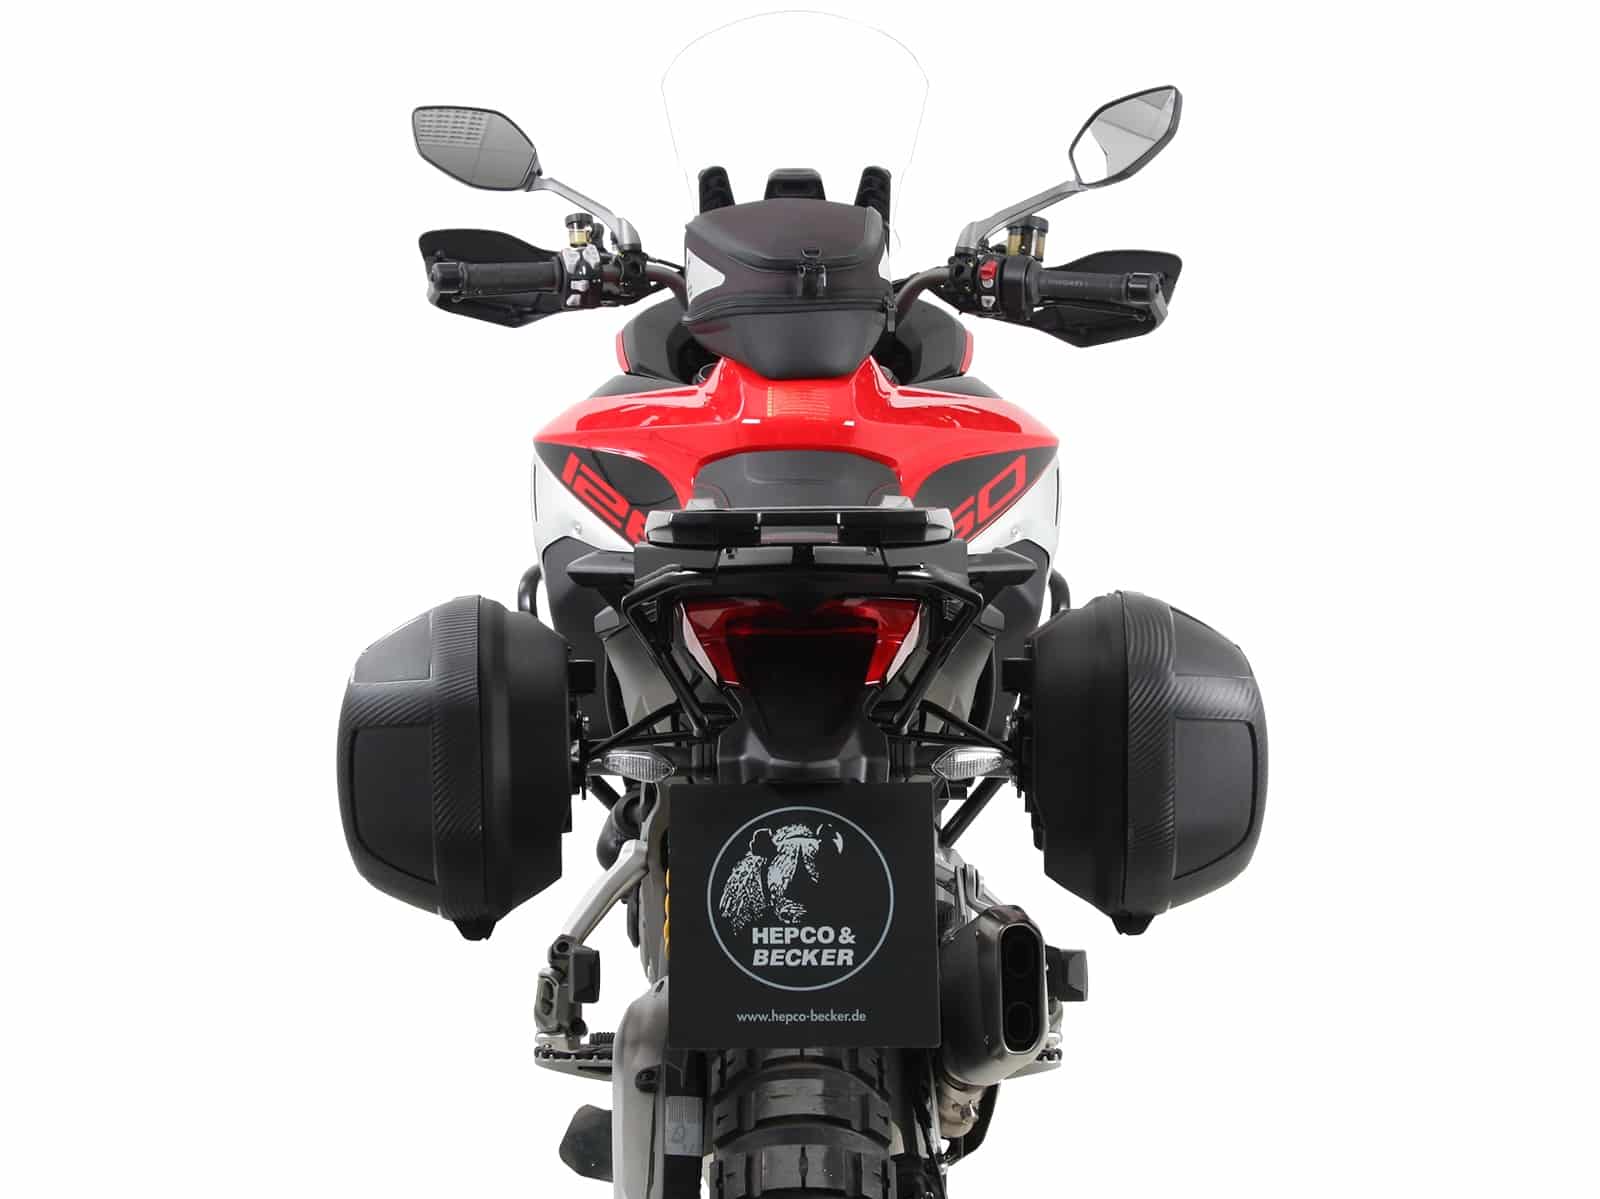 C-Bow sidecarrier for Ducati Multistrada 1260 Enduro (2019-)